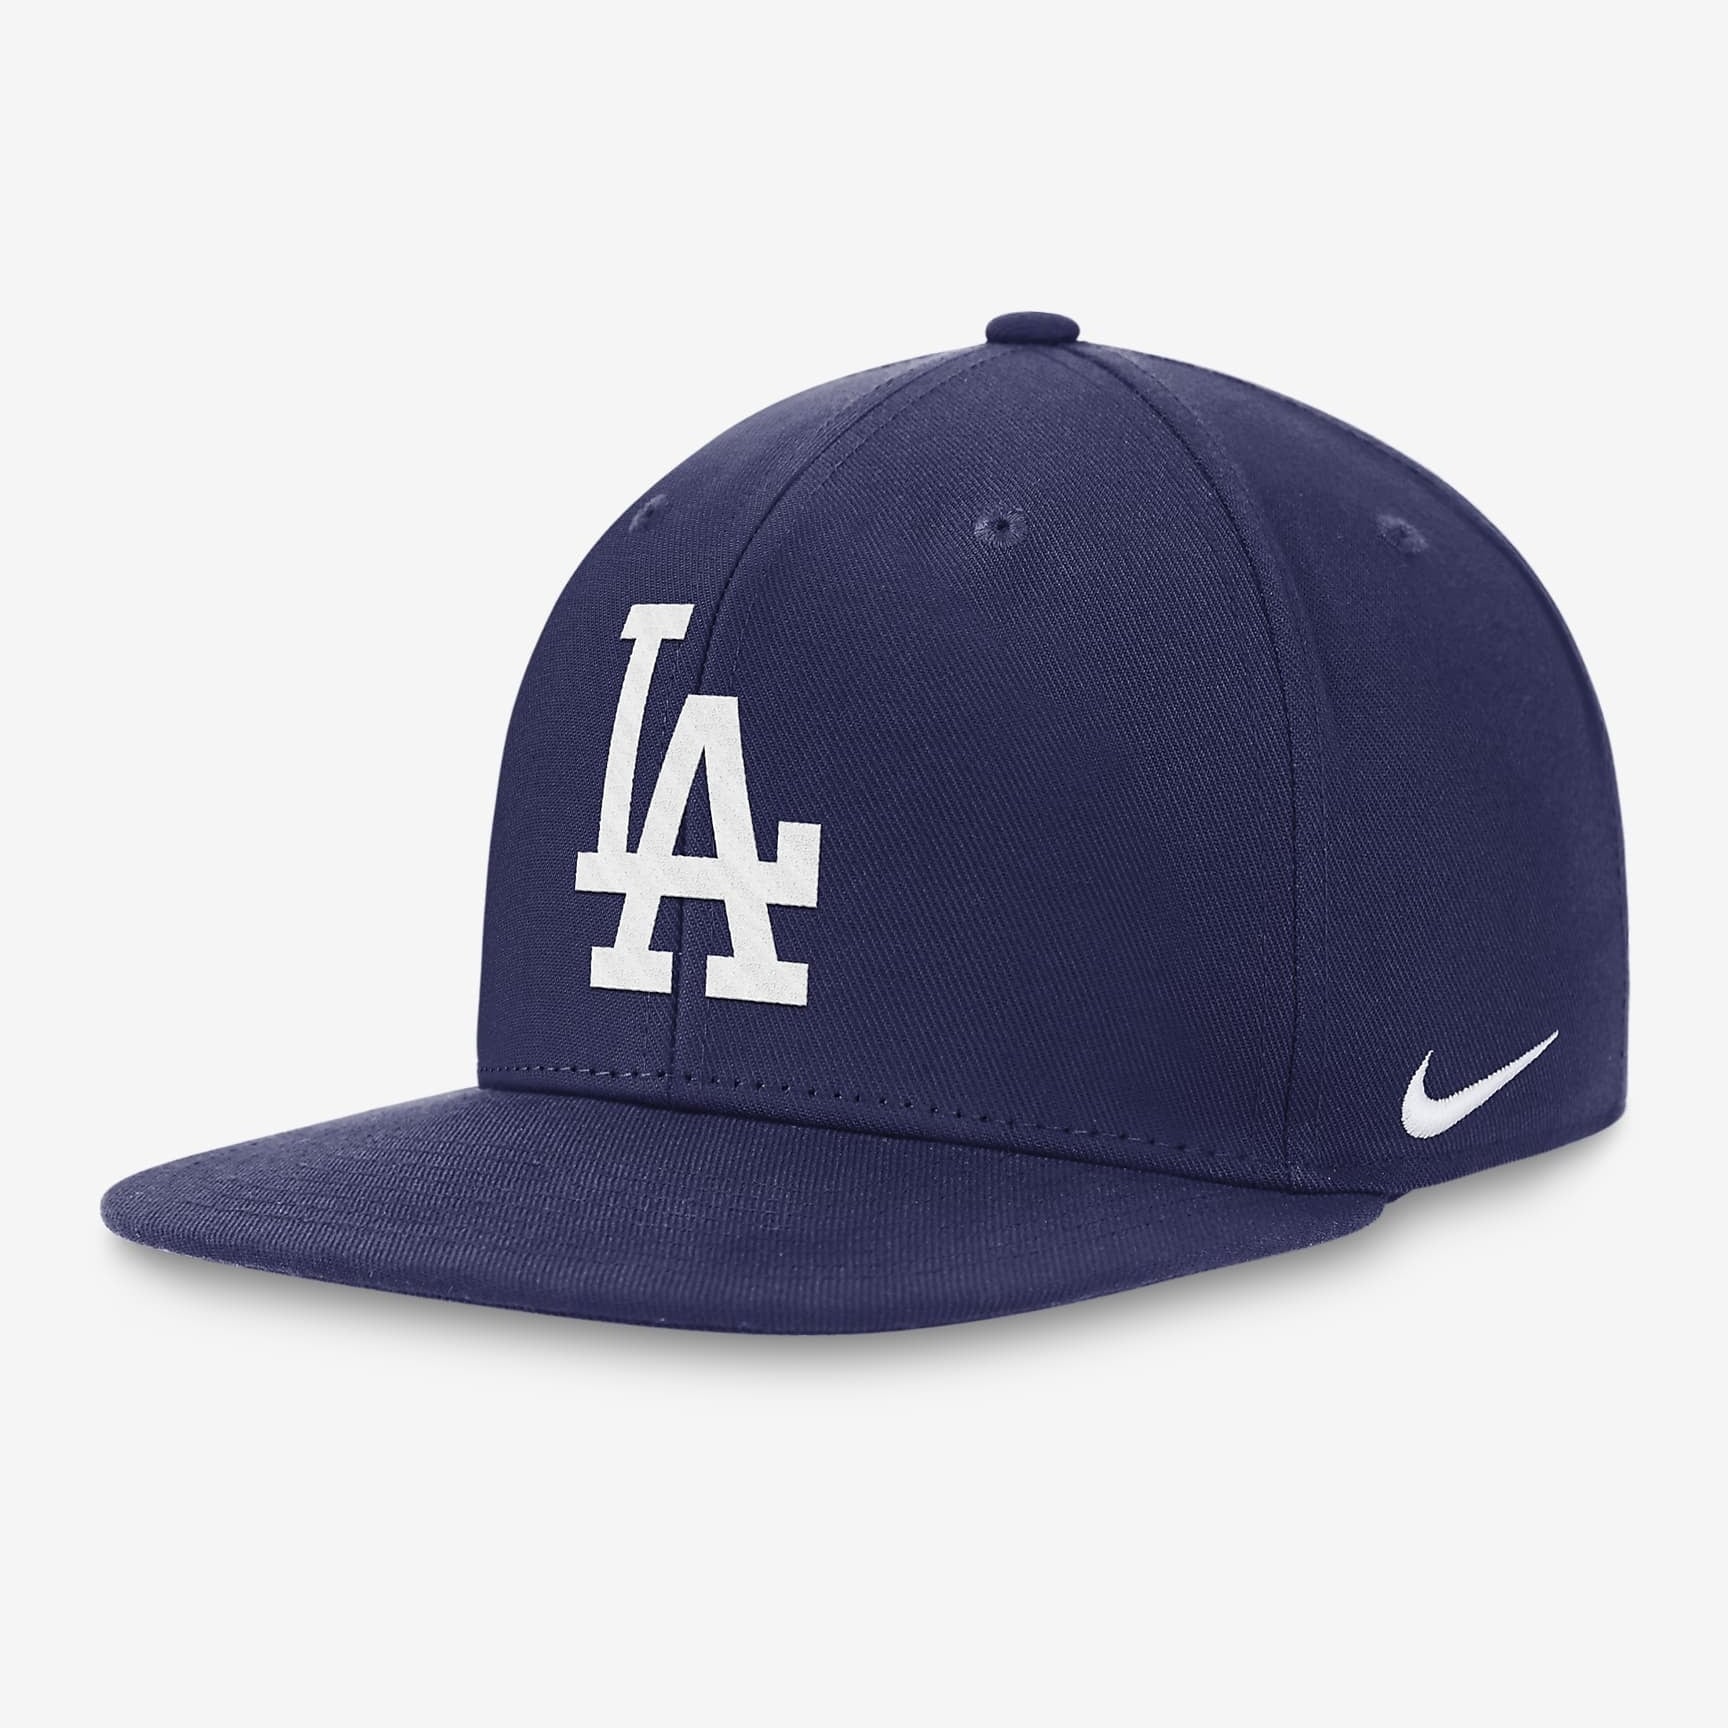 Nike ナイキ ロサンゼルス ドジャース キャップ Los Angeles Dodgers ...